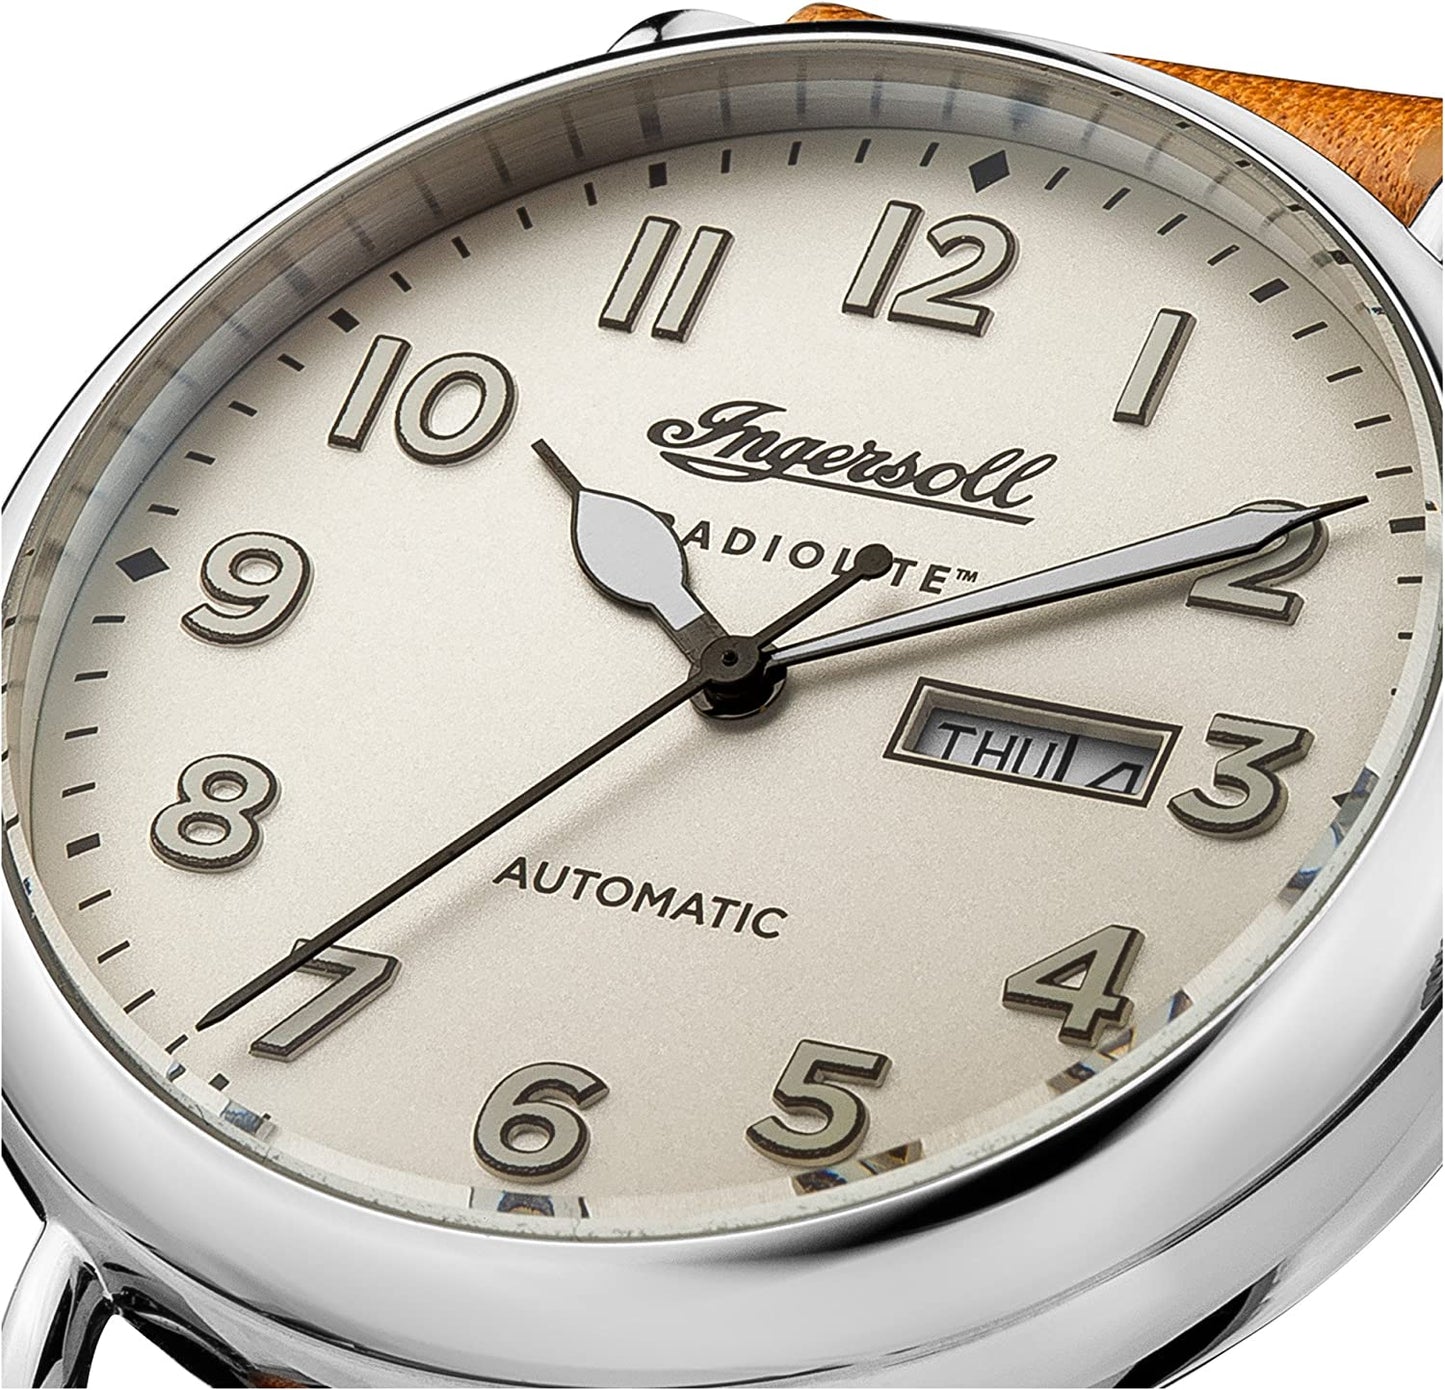 The Trenton Automatic I03404 Watch